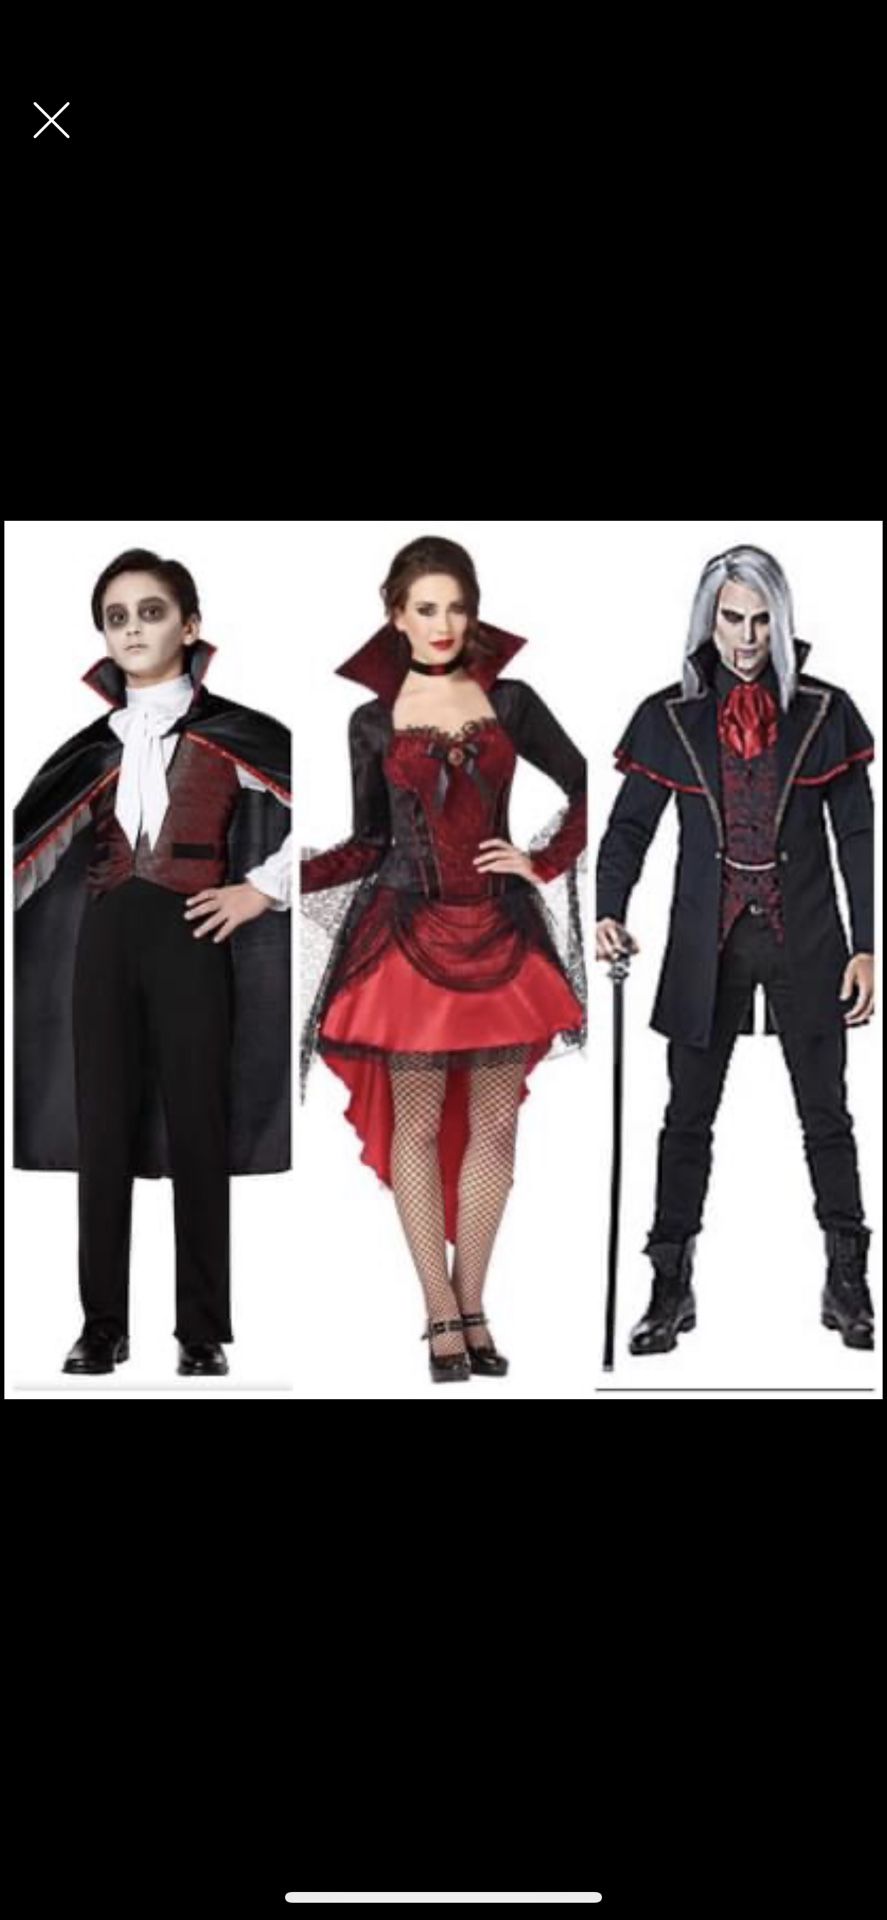 Vampire halloween costumes